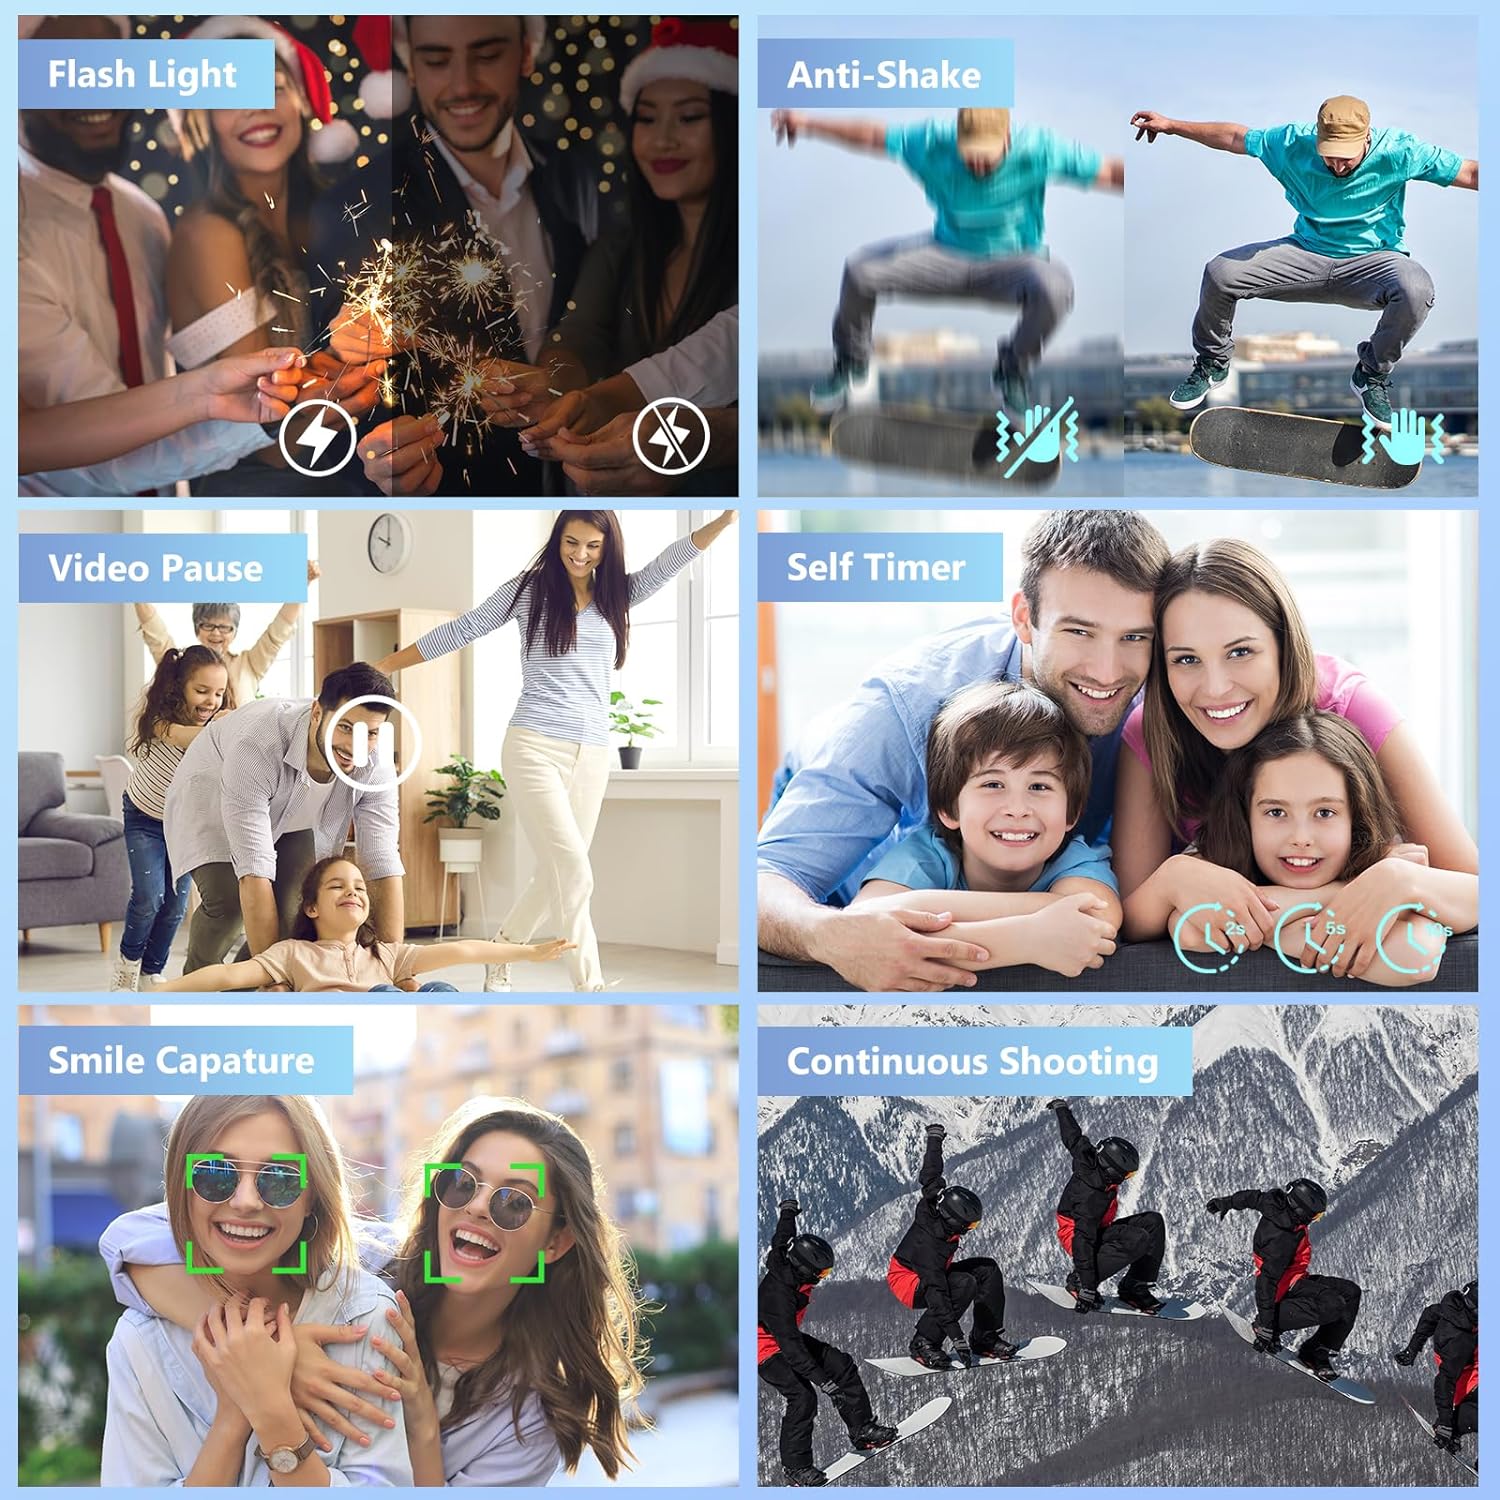 Capture Your Memories in Stunning 4K - A Review of the Bifevsr 4K Digital Camera